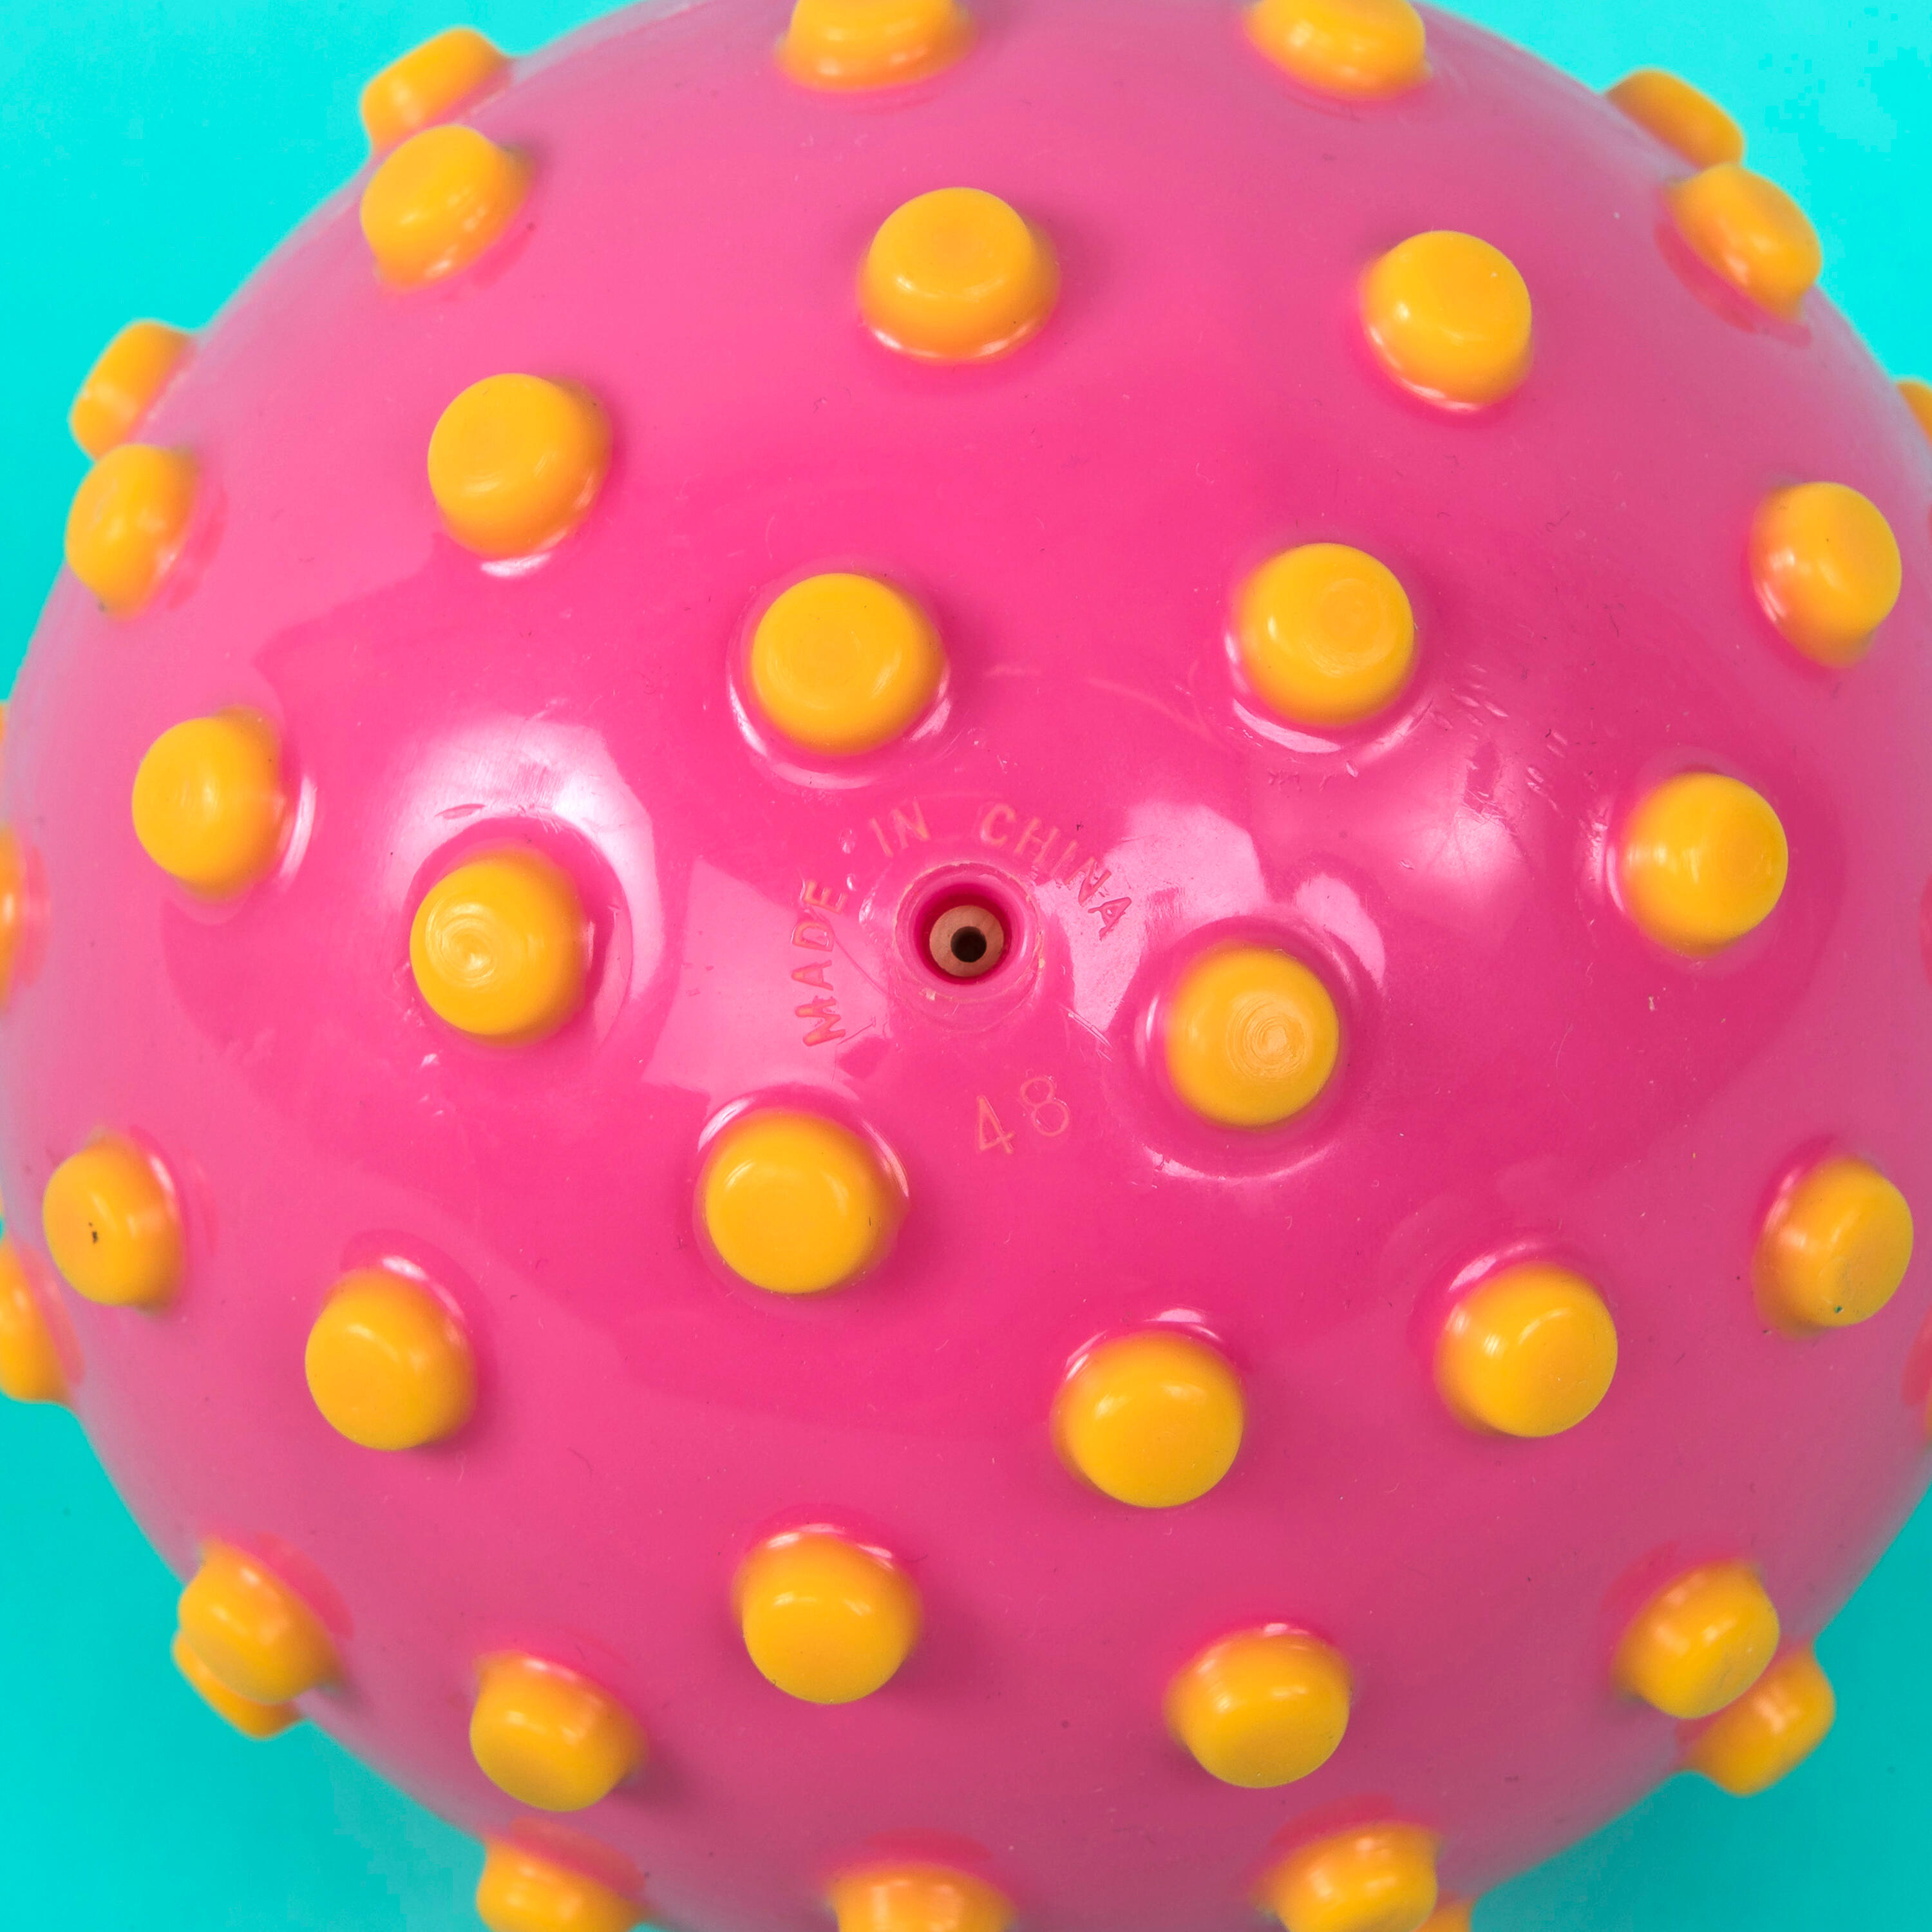 Small aquatic awakening balloon, pink with yellow dots 2/3